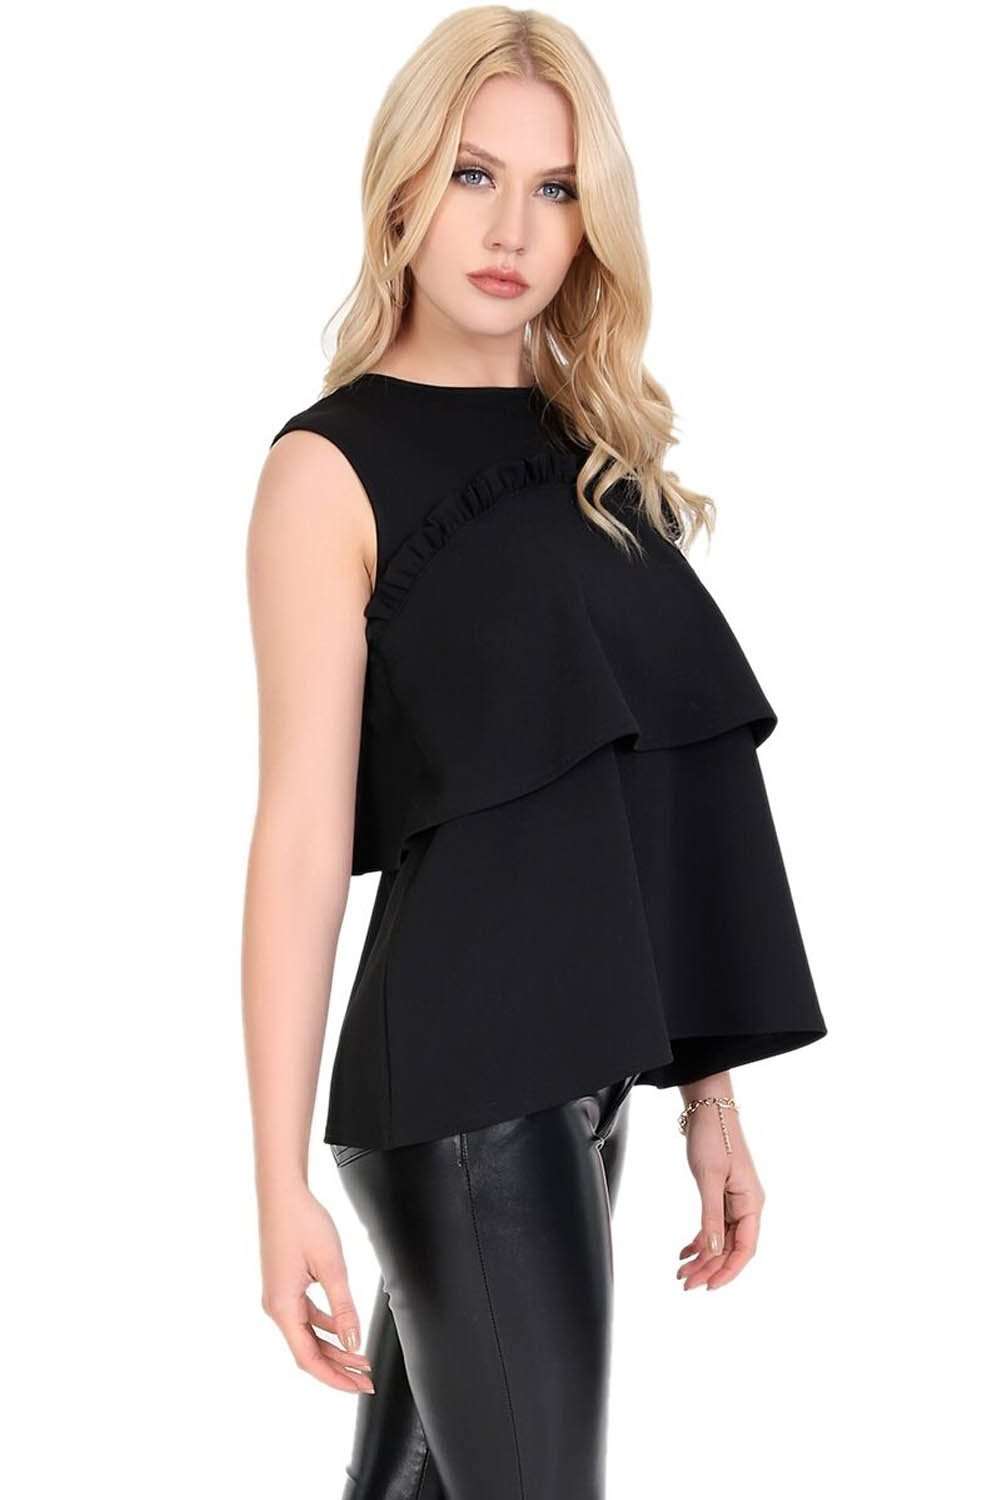 Black Crepe Sleeveless Tiered Frill Vest Top - bejealous-com